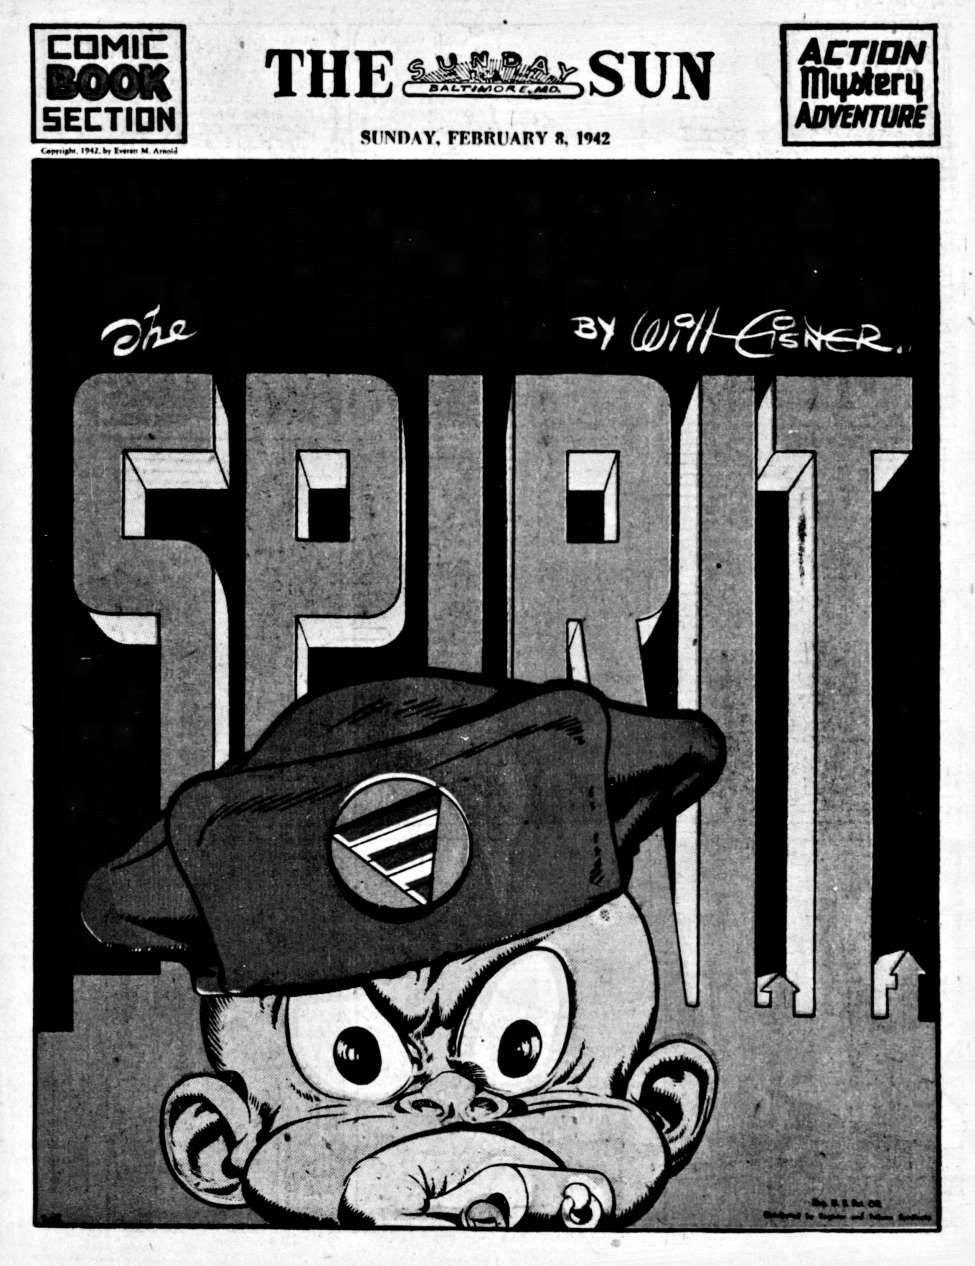 Comic Book Cover For The Spirit (1942-02-08) - Baltimore Sun (b/w)